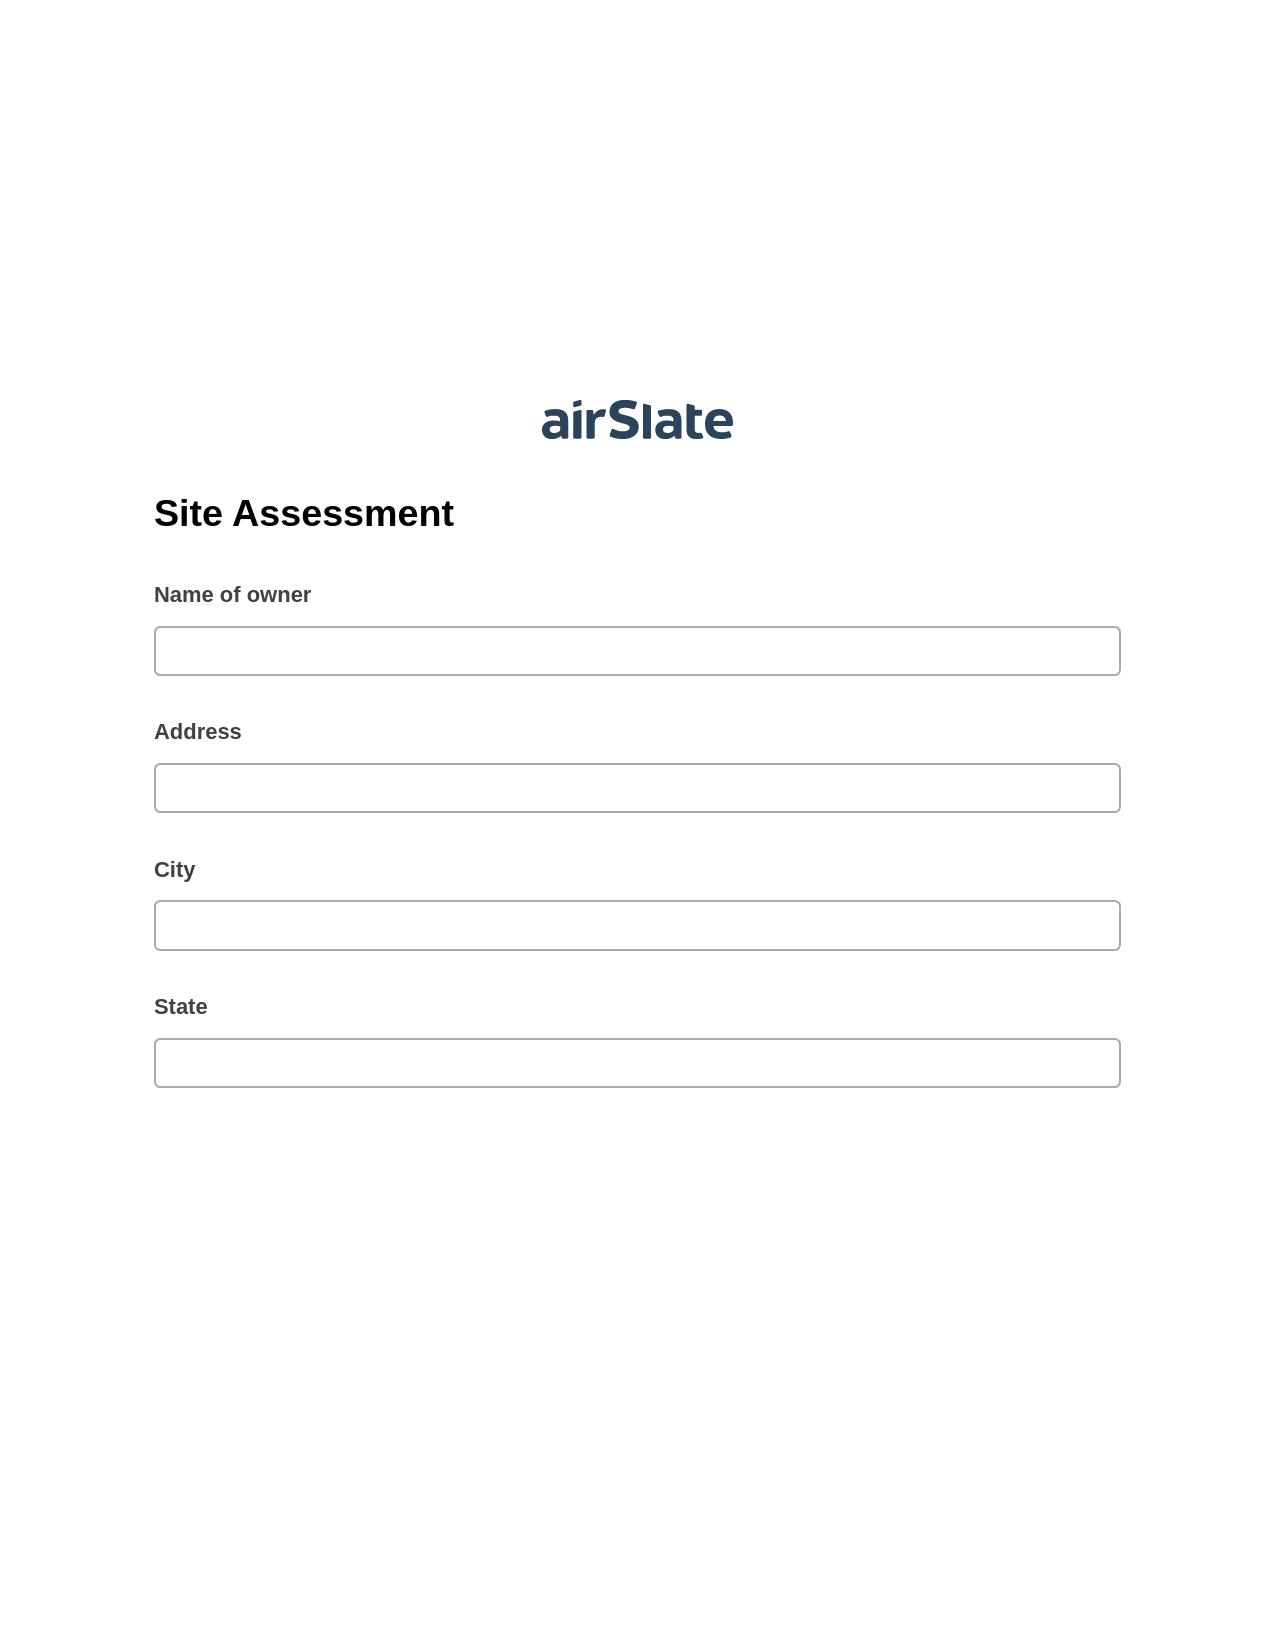 Multirole Site Assessment Pre-fill from NetSuite Records Bot, Audit Trail Bot, Webhook Postfinish Bot